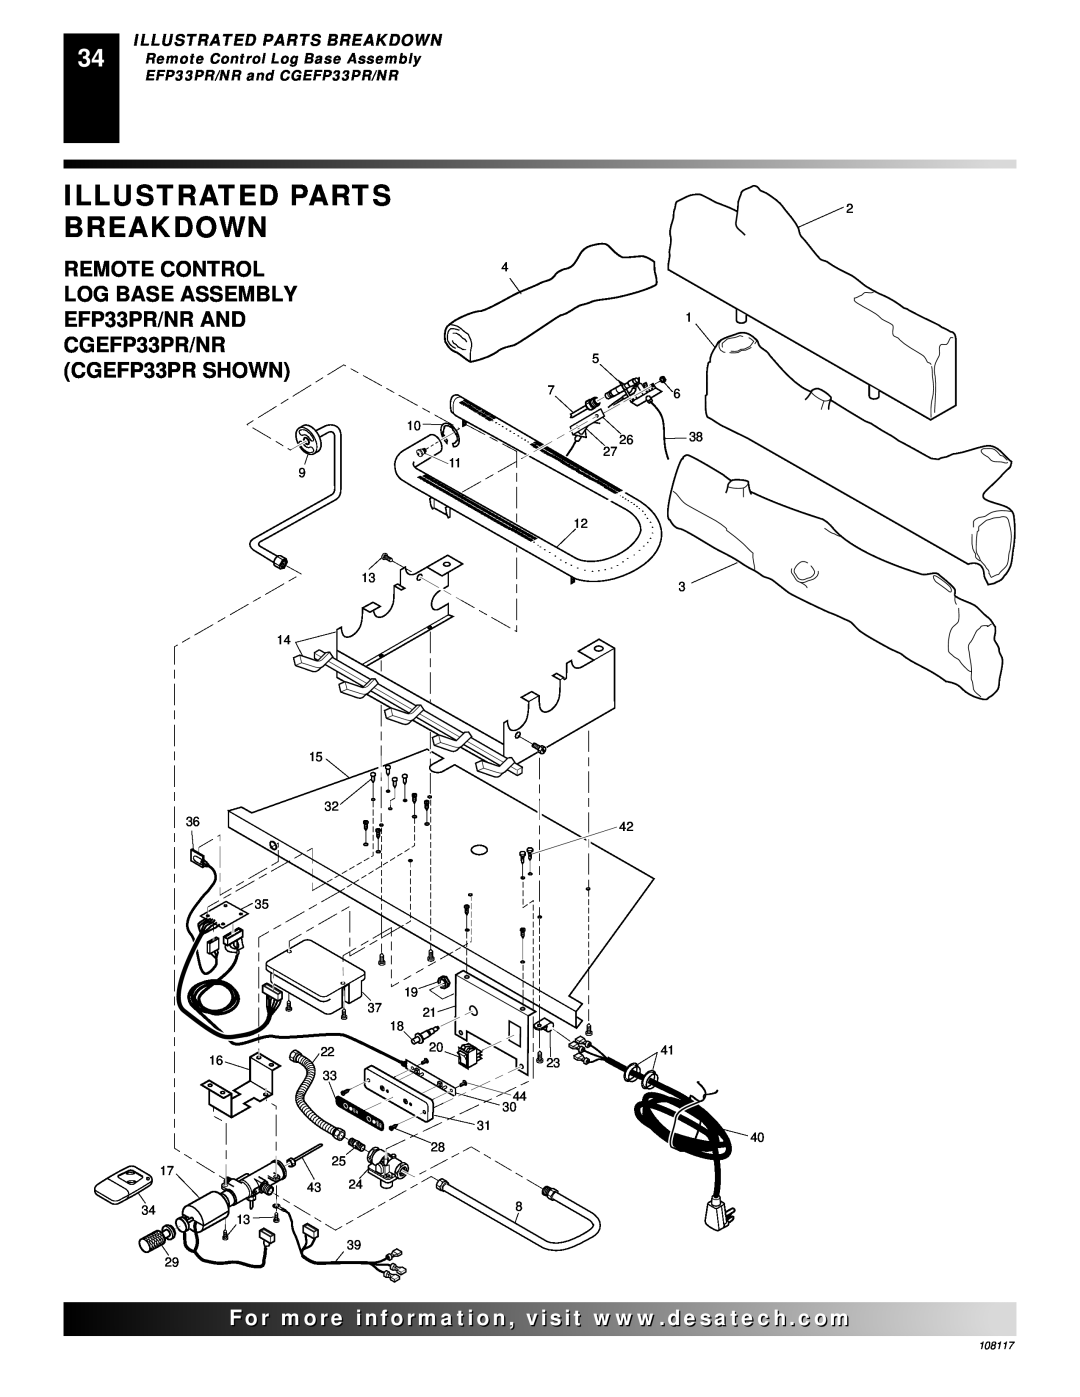 Desa VTGF33PR, VTGF33NR Illustrated Parts, Breakdown, Remote Control, Log Base Assembly, EFP33PR/NR AND, CGEFP33PR/NR 